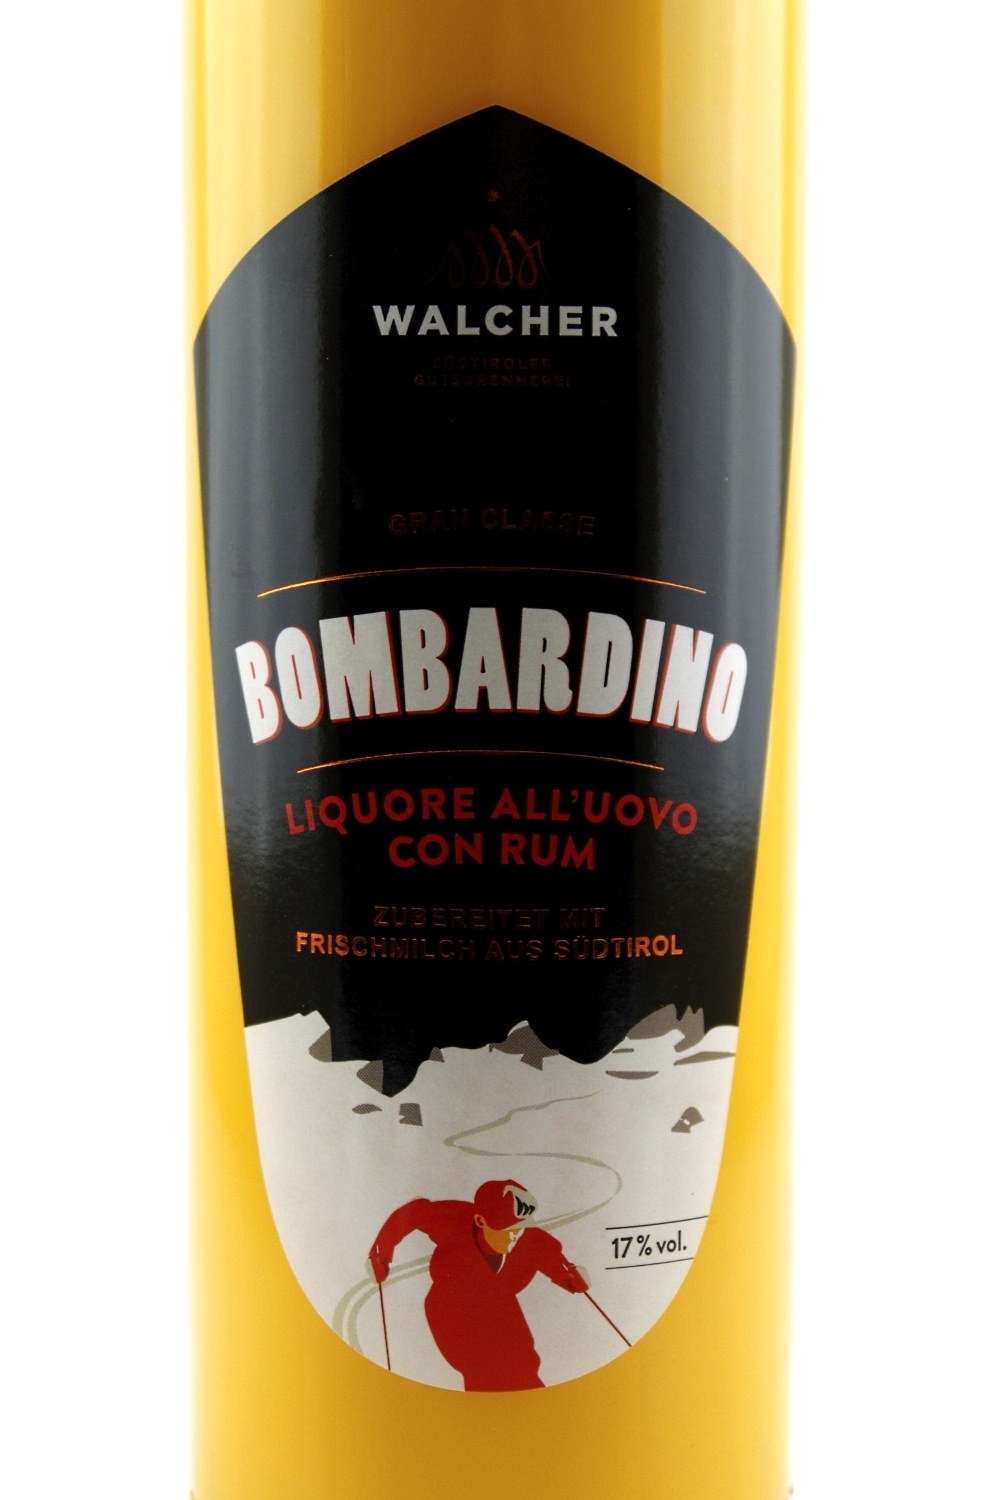 Bombardino egg liqueur 17% with vol. Rum Distillery Walcher